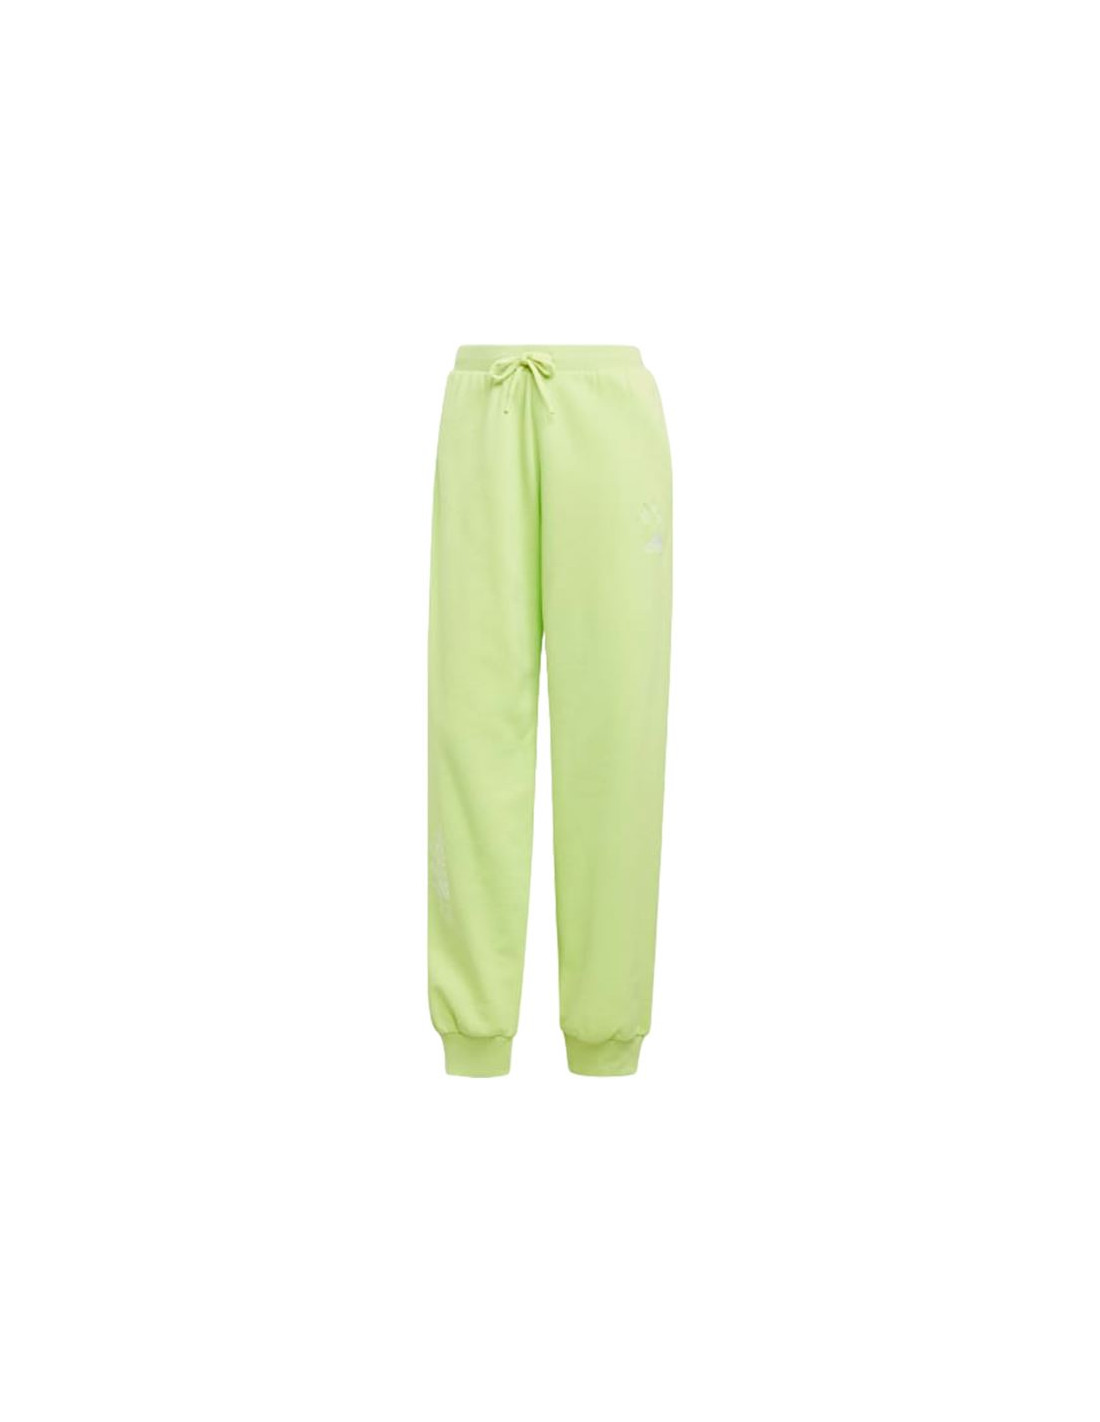 adidas Bluv Q3 Green Sweatpants